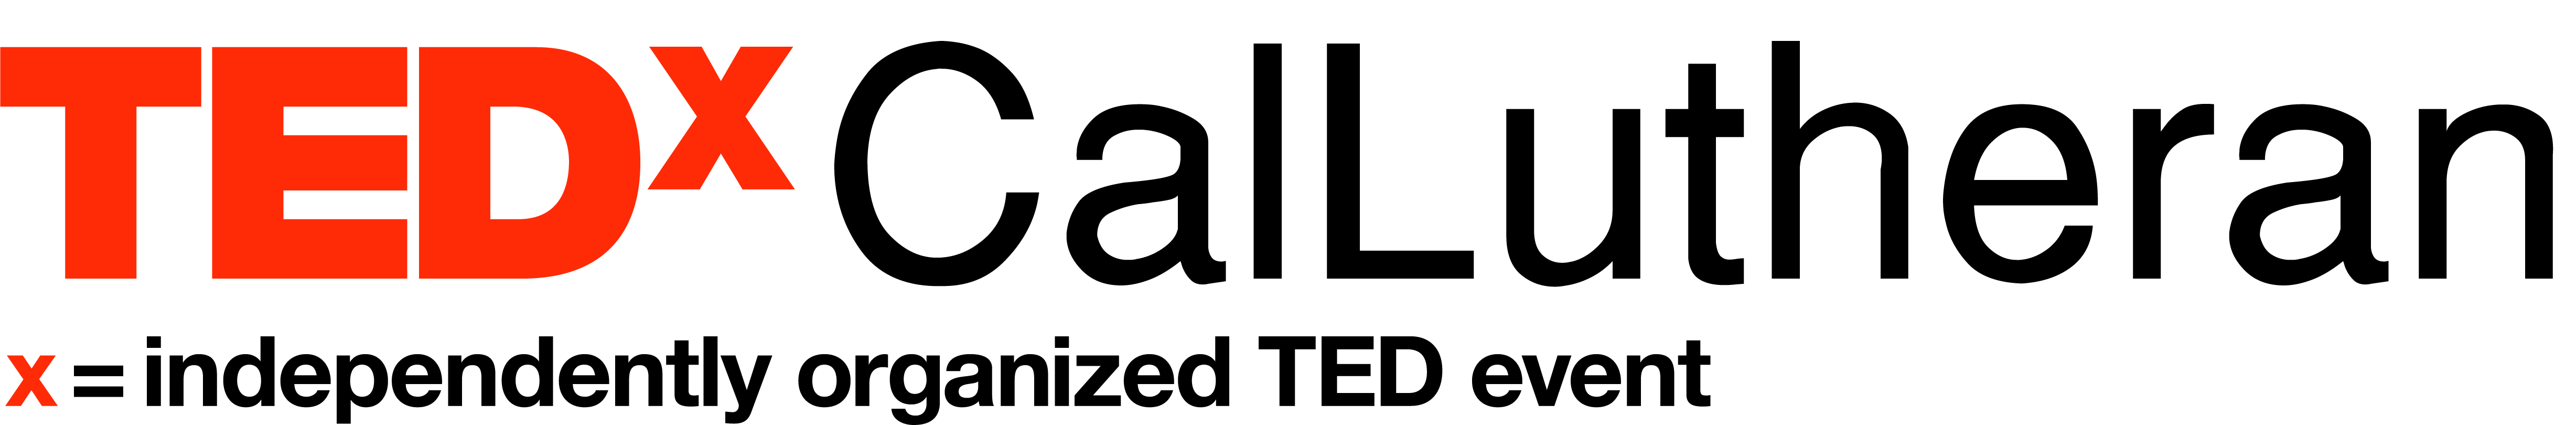 TEDx Logo - TEDx Cal Lutheran